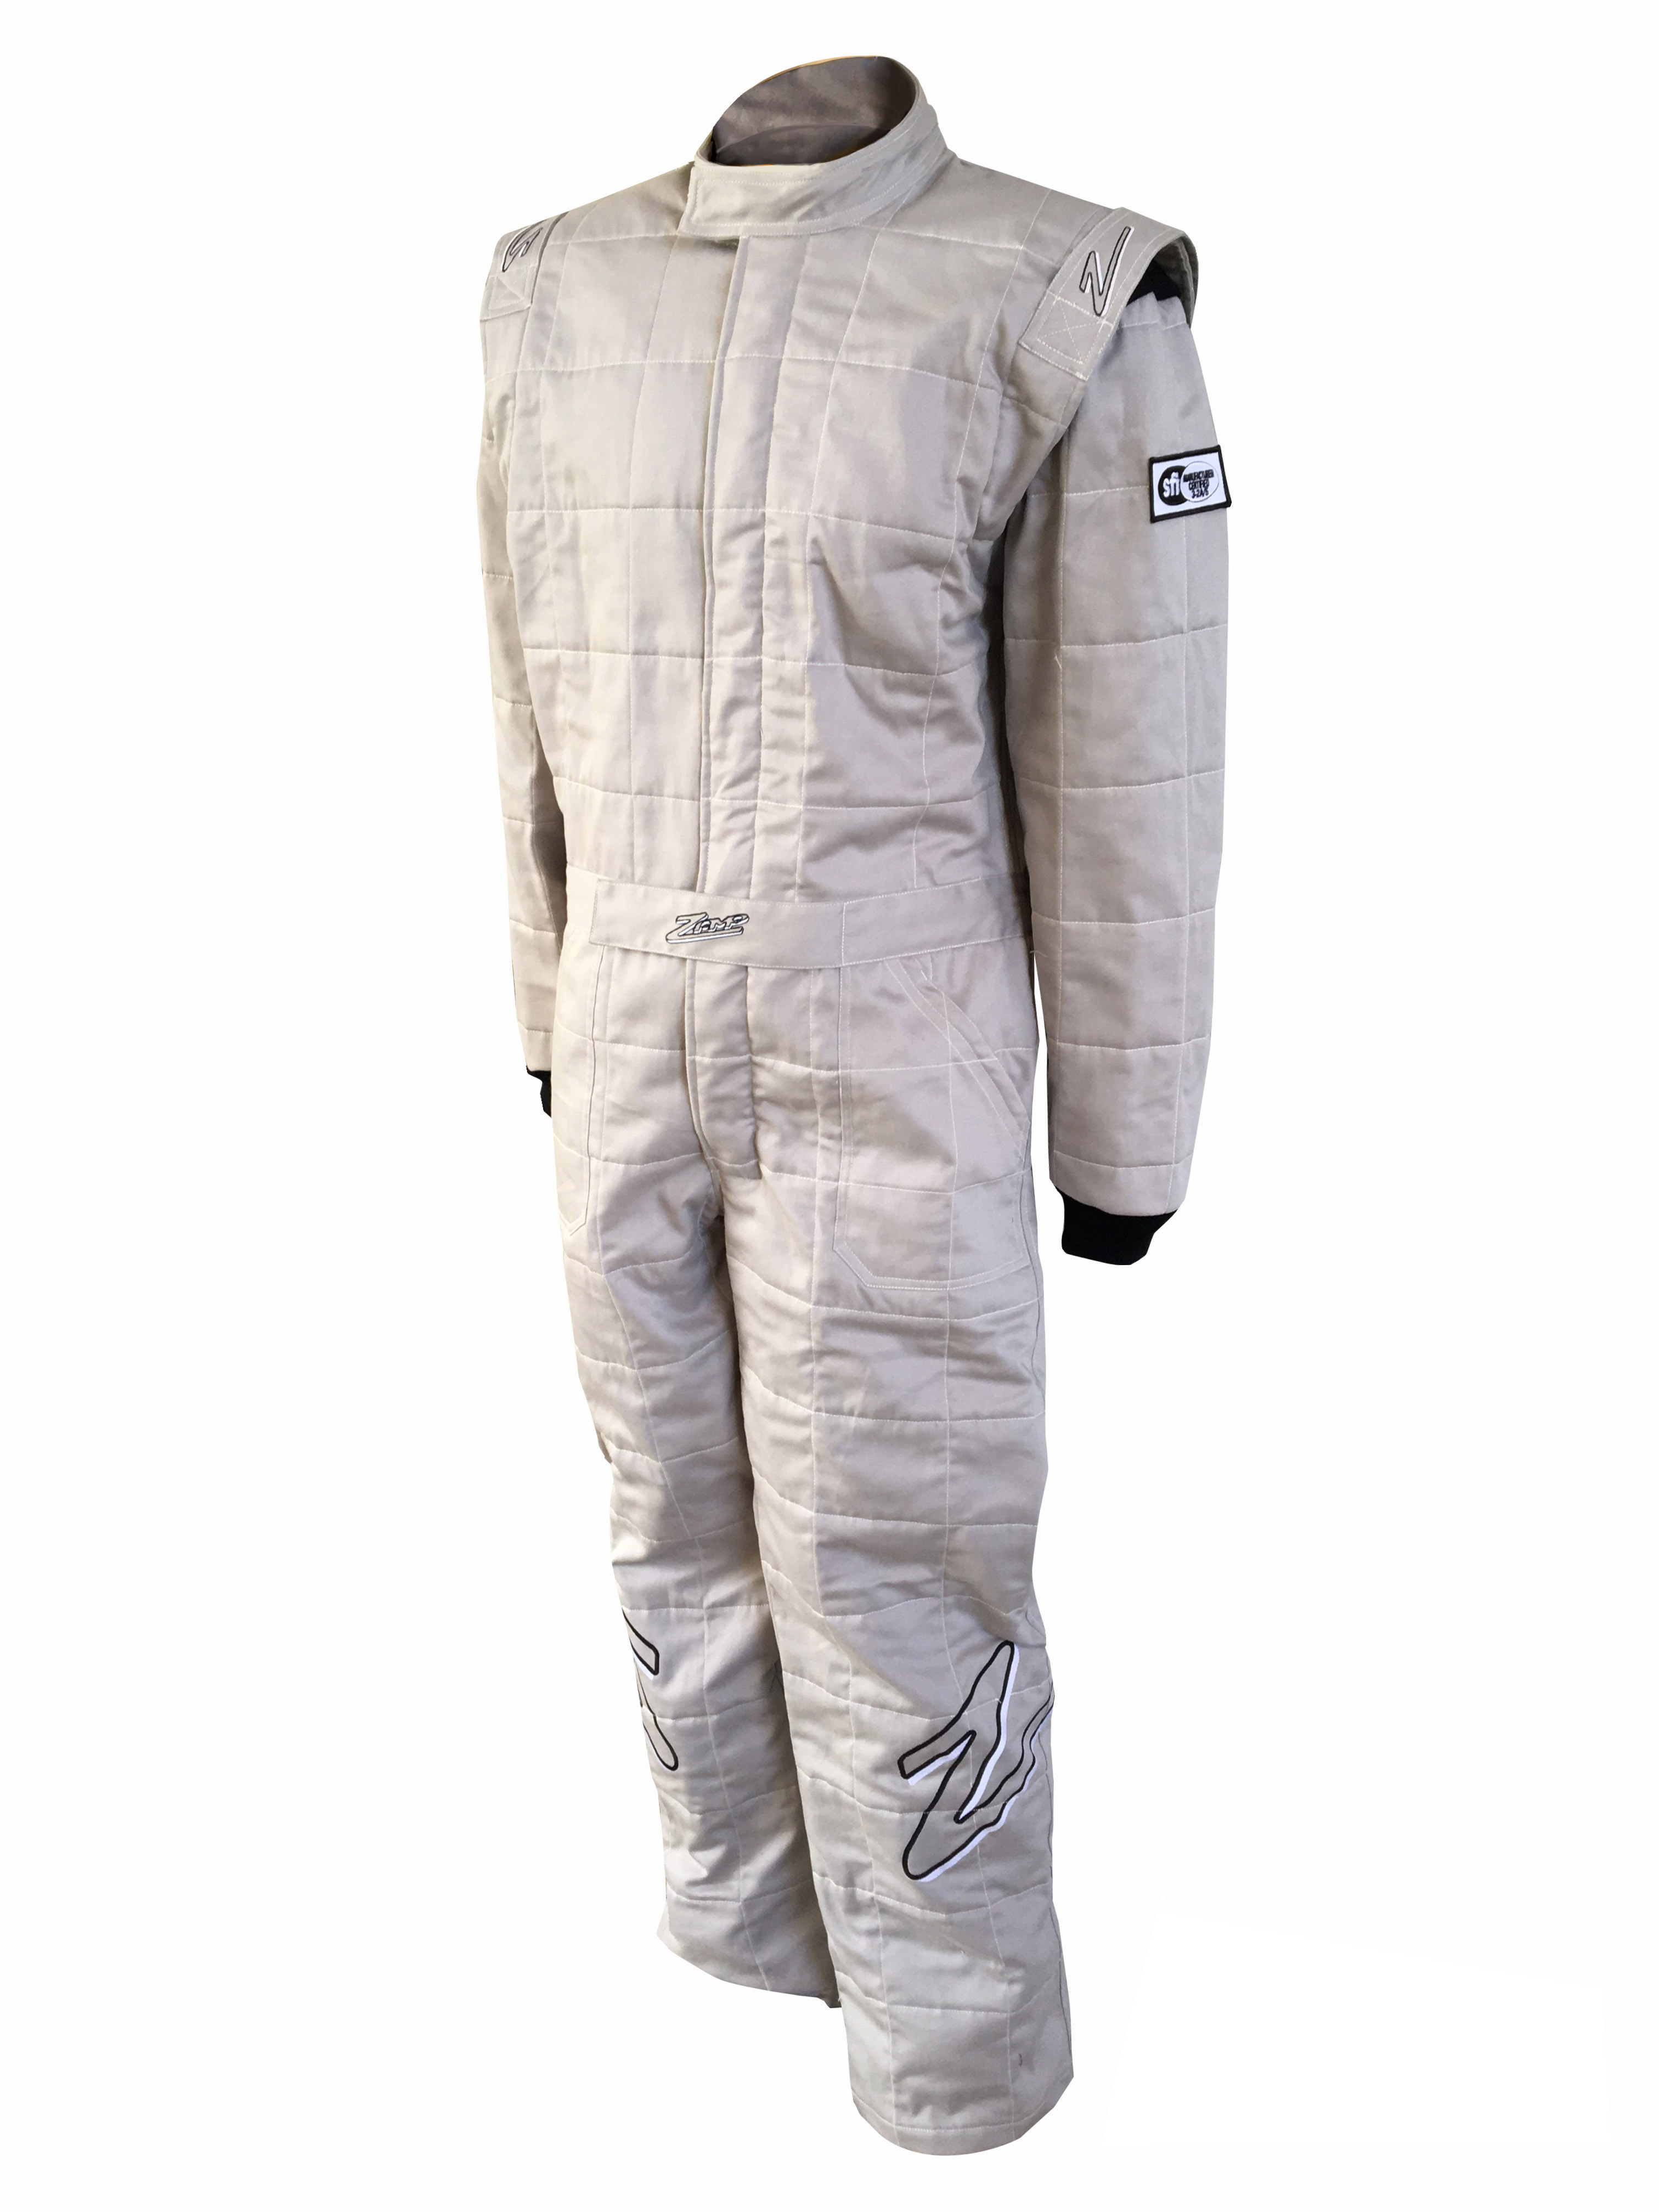 Zamp Racing R030015XL Driving Suit, ZR-30, 1-Piece, SFI 3.2a/5, Tripler Layer, Fire Retardant Fabric, Gray, X-Large, Each